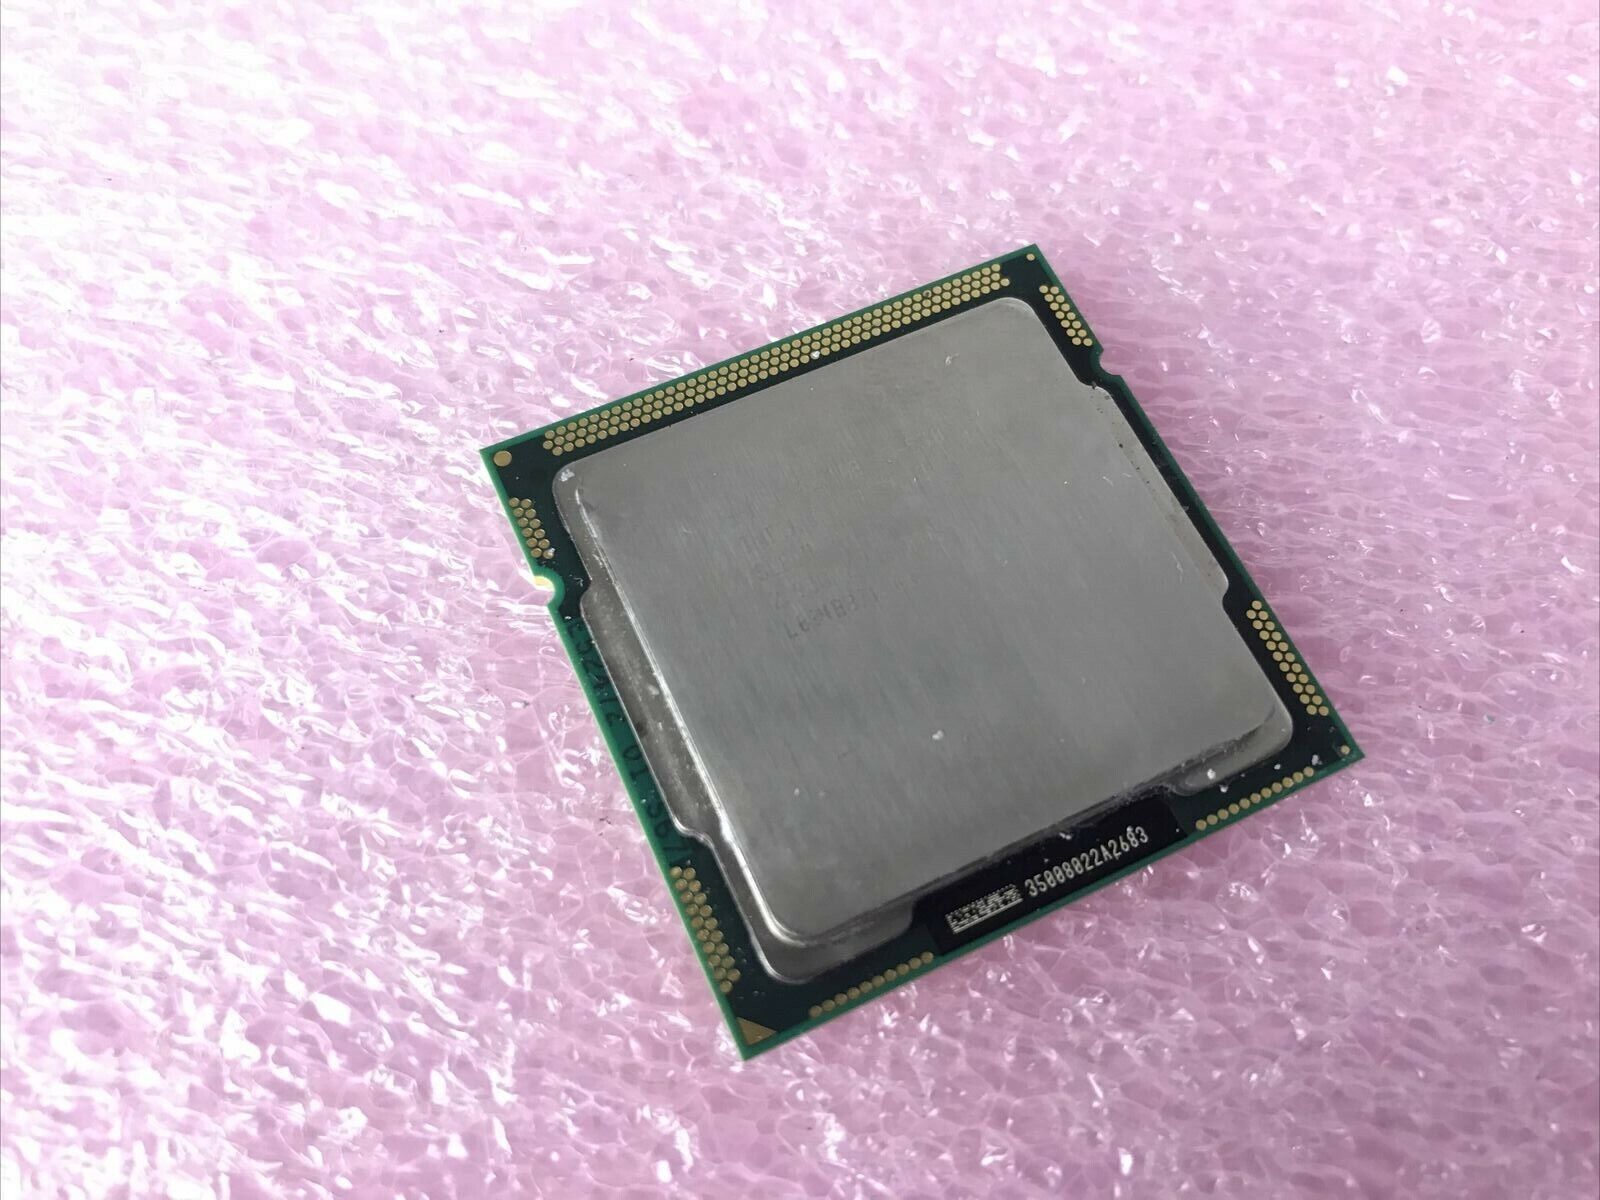 Intel Core i3-530 2.93GHz SLBLR Processor LGA1156